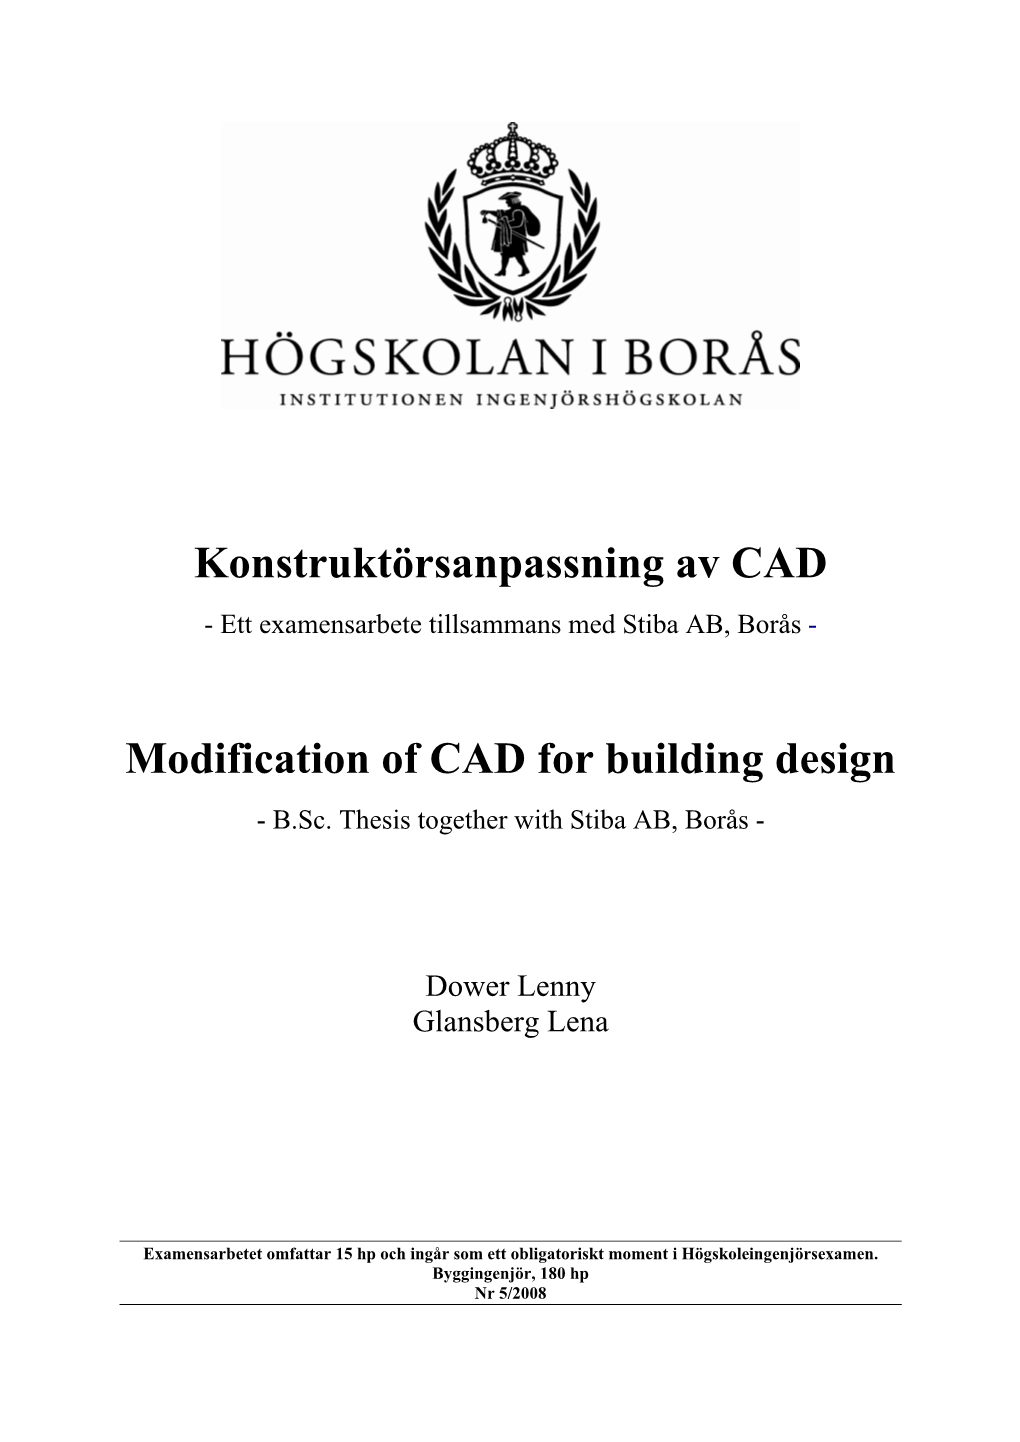 Modification of CAD for Building Design - B.Sc